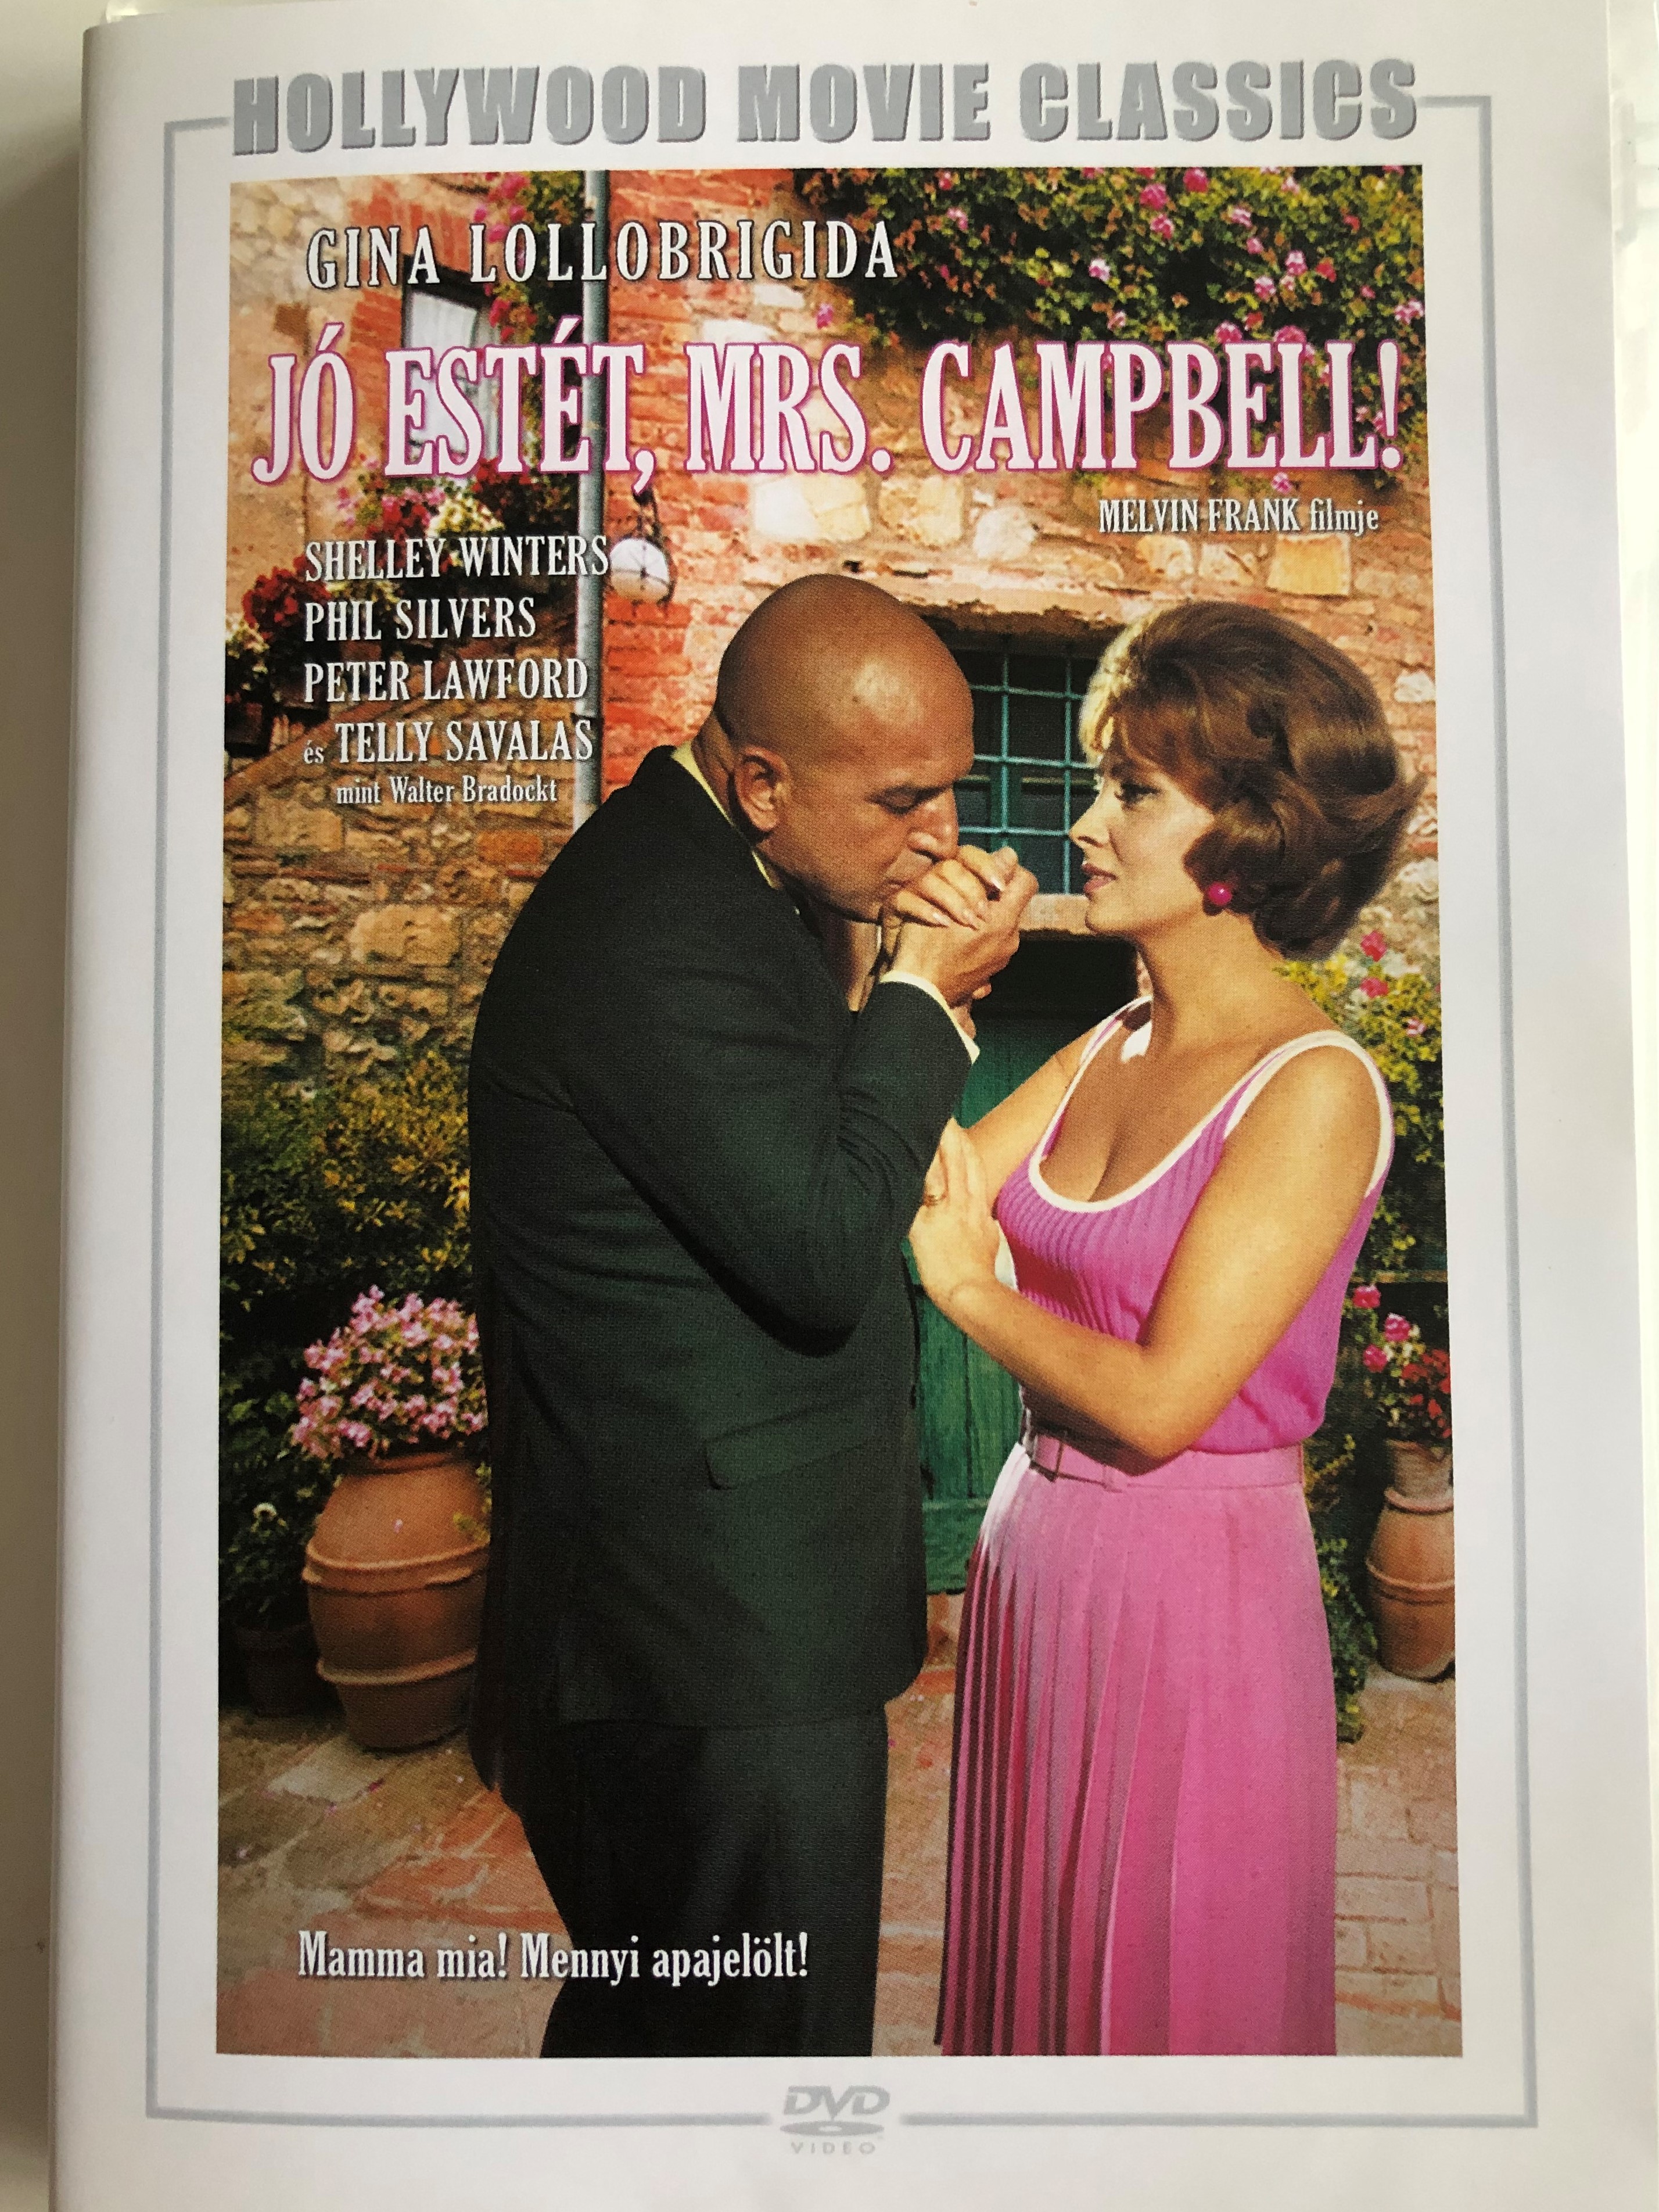 buona-sera-mrs.-campbell-dvd-1968-j-est-t-mrs.-campbell-1.jpg